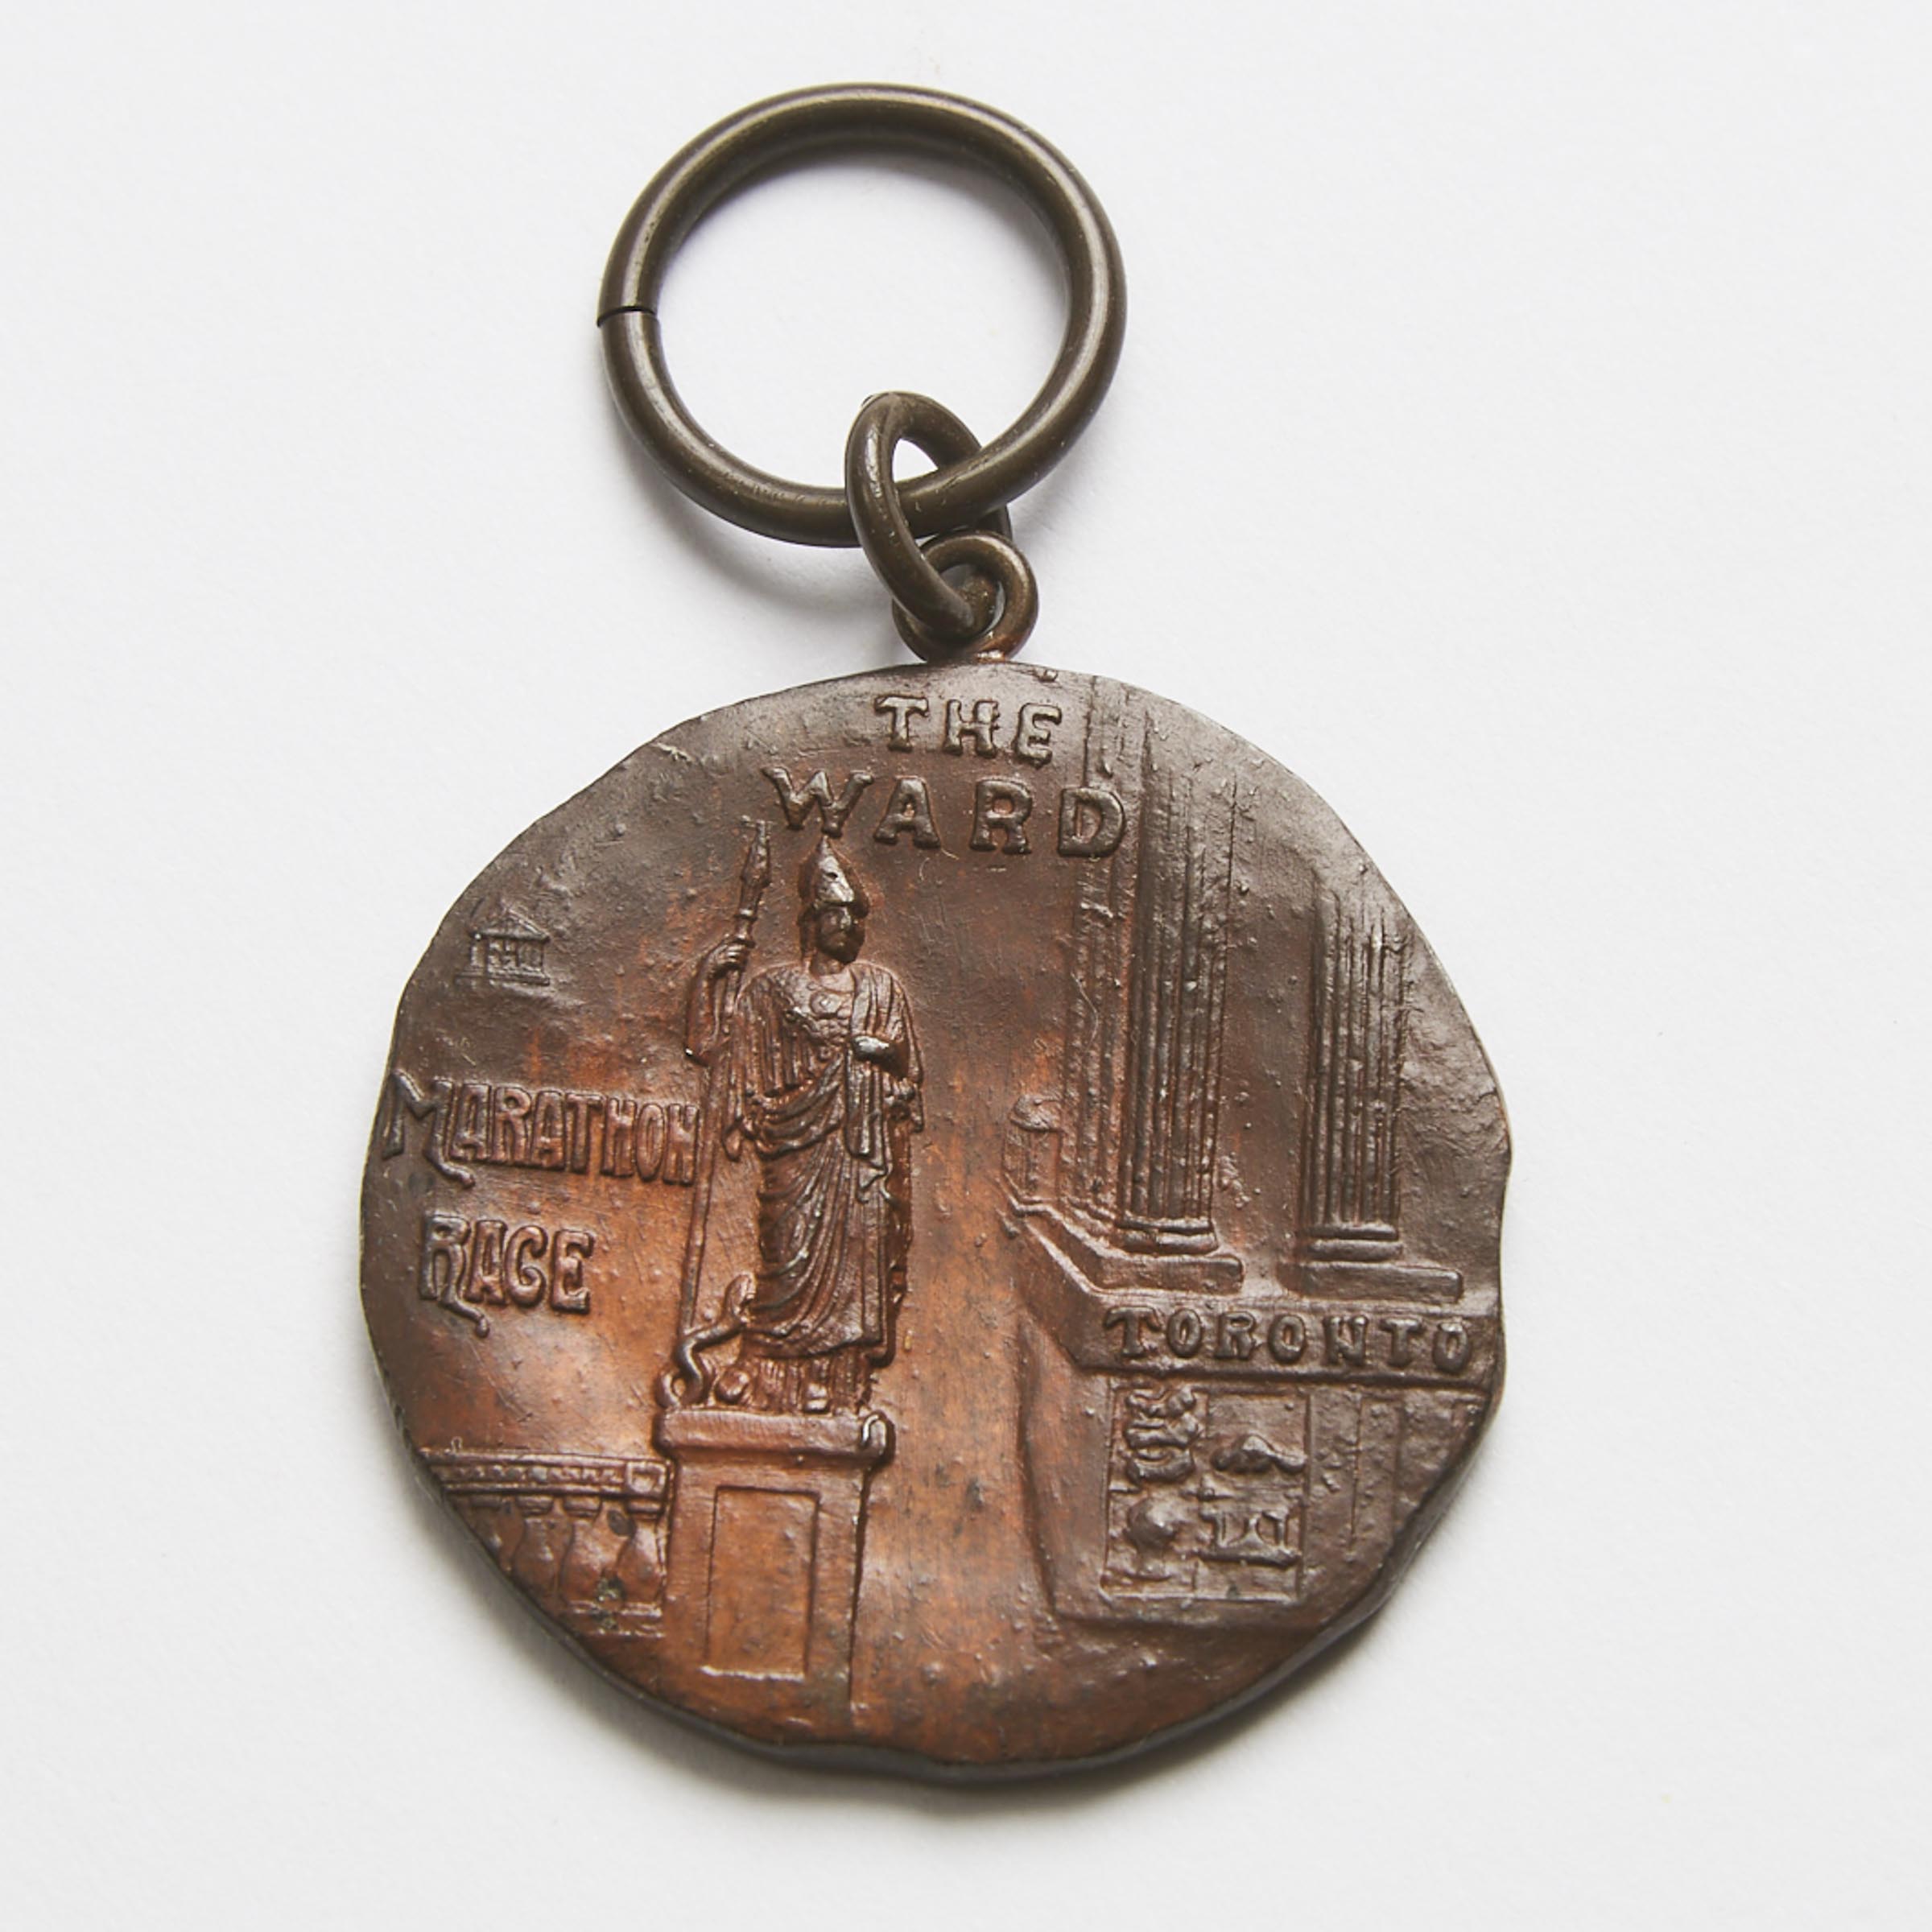 Copper 'The Ward Marathon Race' Medallion, Toronto, c.1906